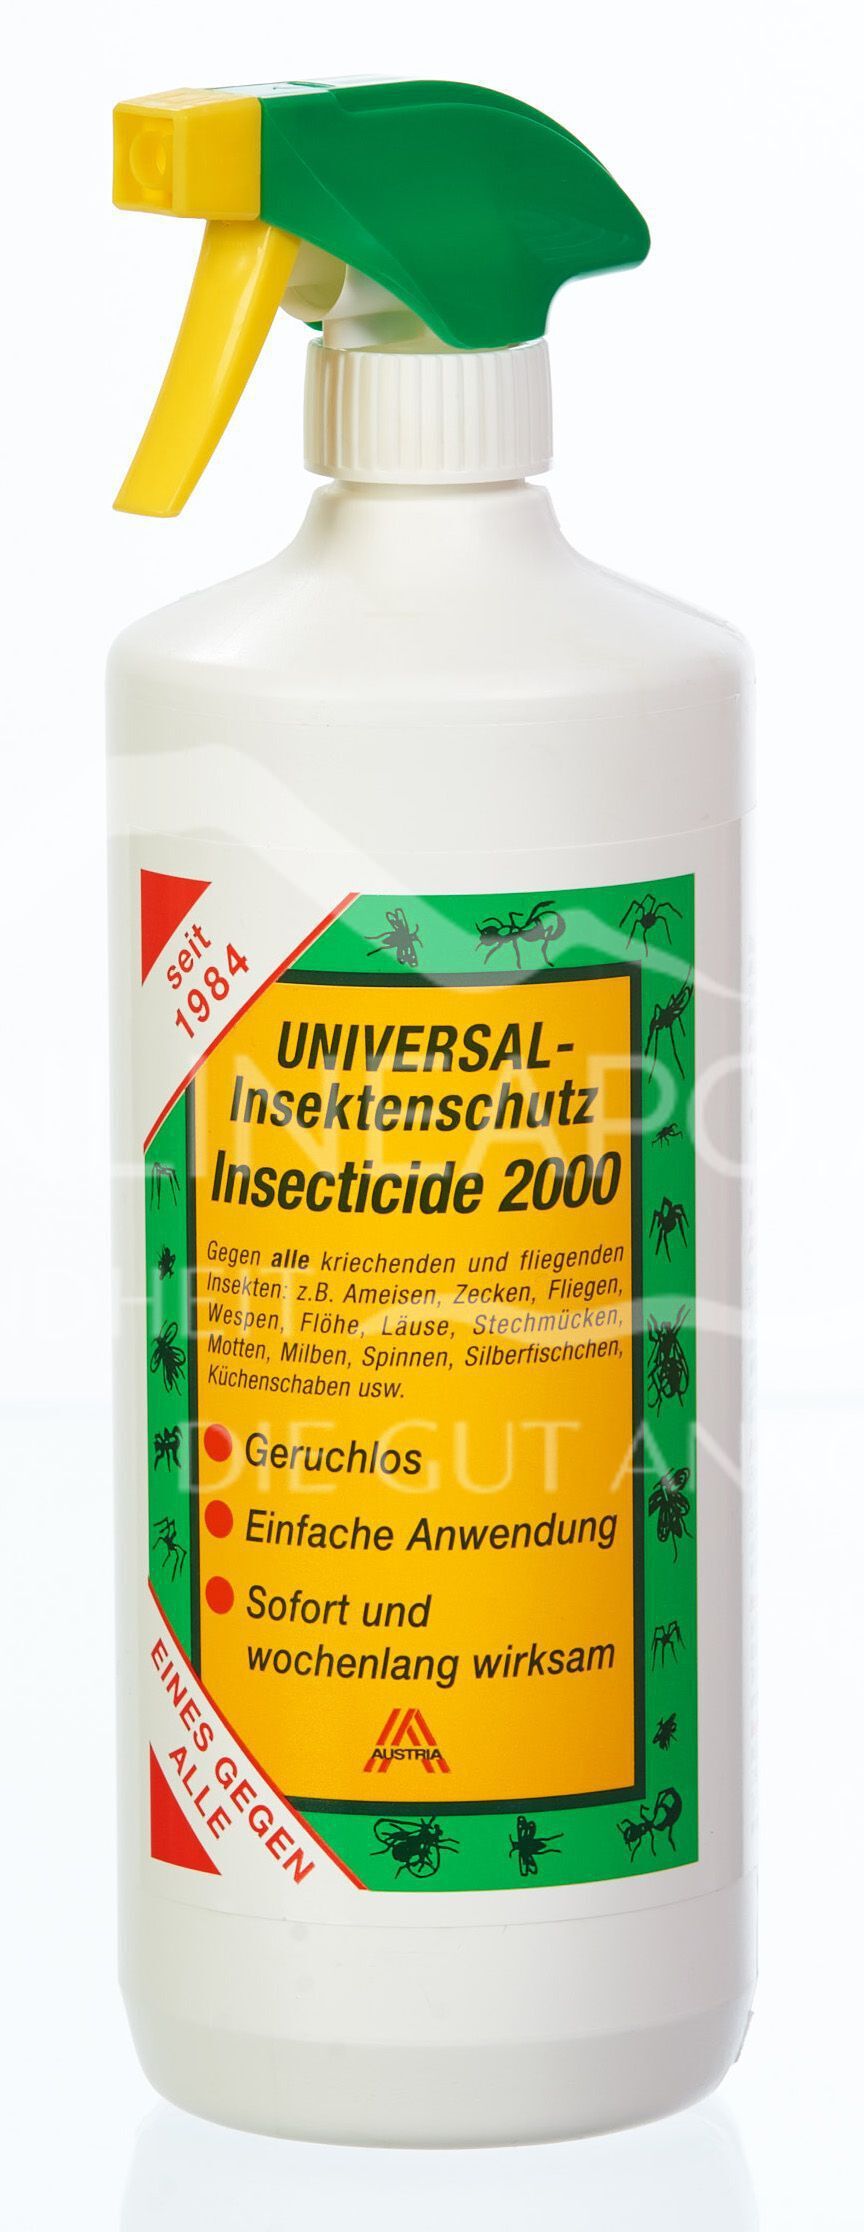 Universal-Insektenschutz Insecticide 2000 Spray